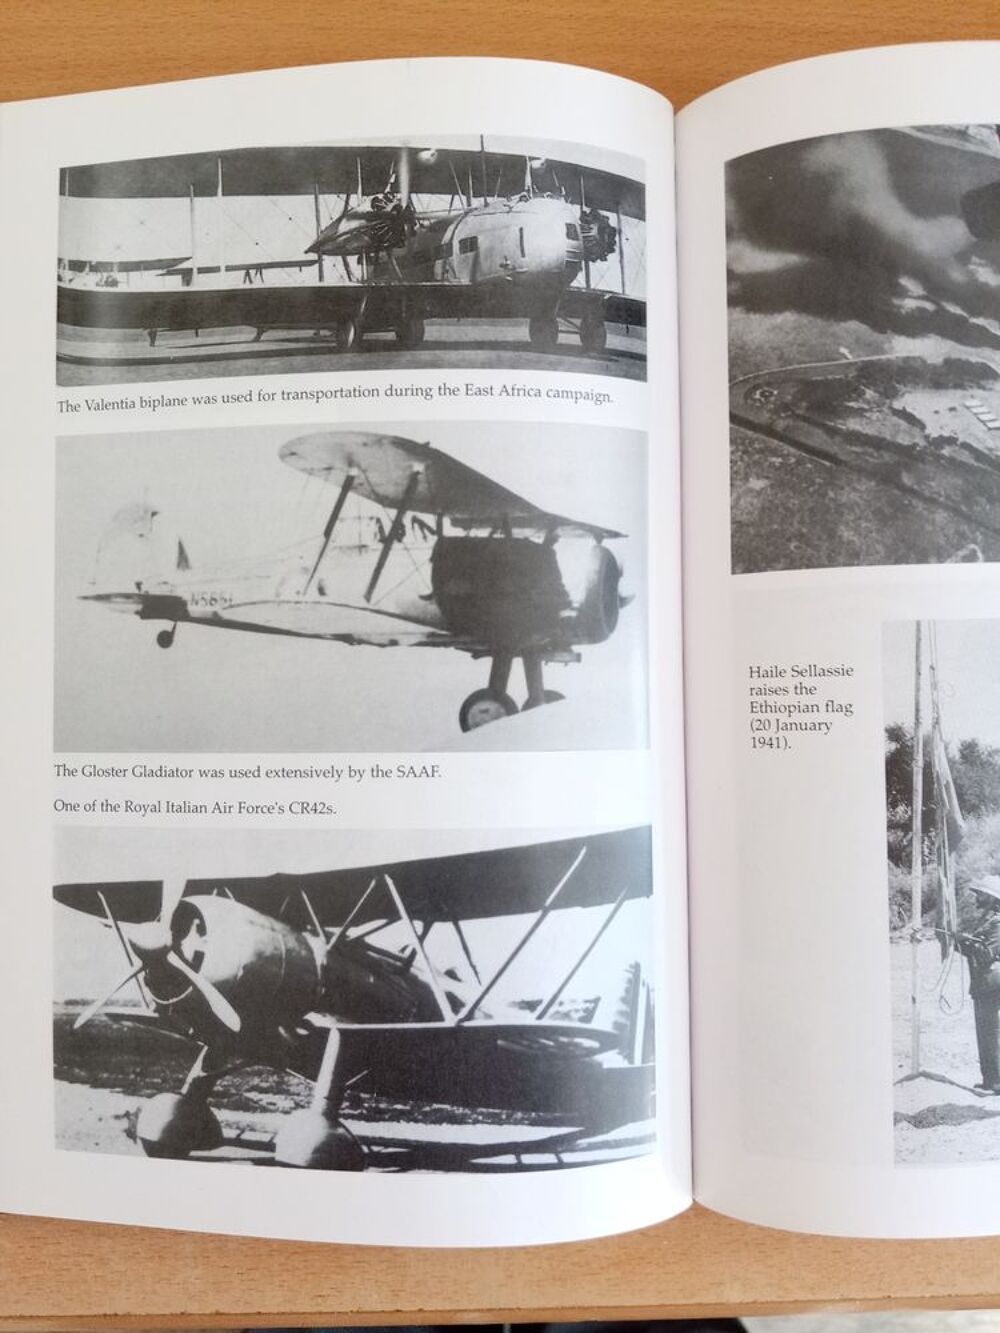 Air War East Africa 1940-41. Raf Versus Italian Air Force. Livres et BD